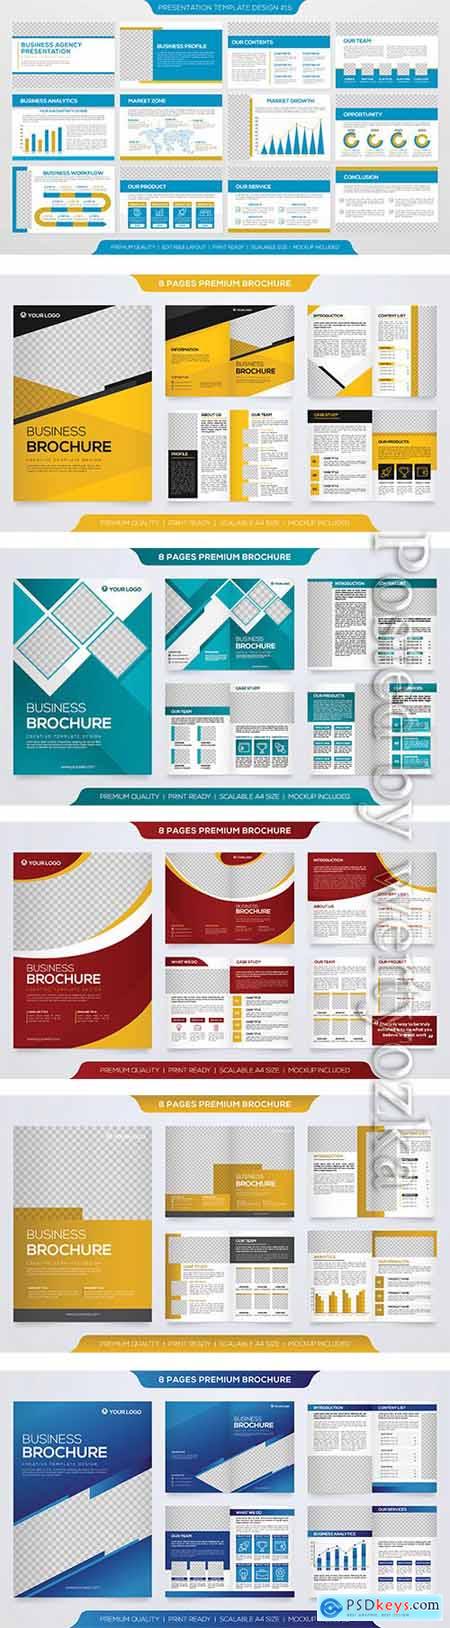 Brochure template design with minimalist concept